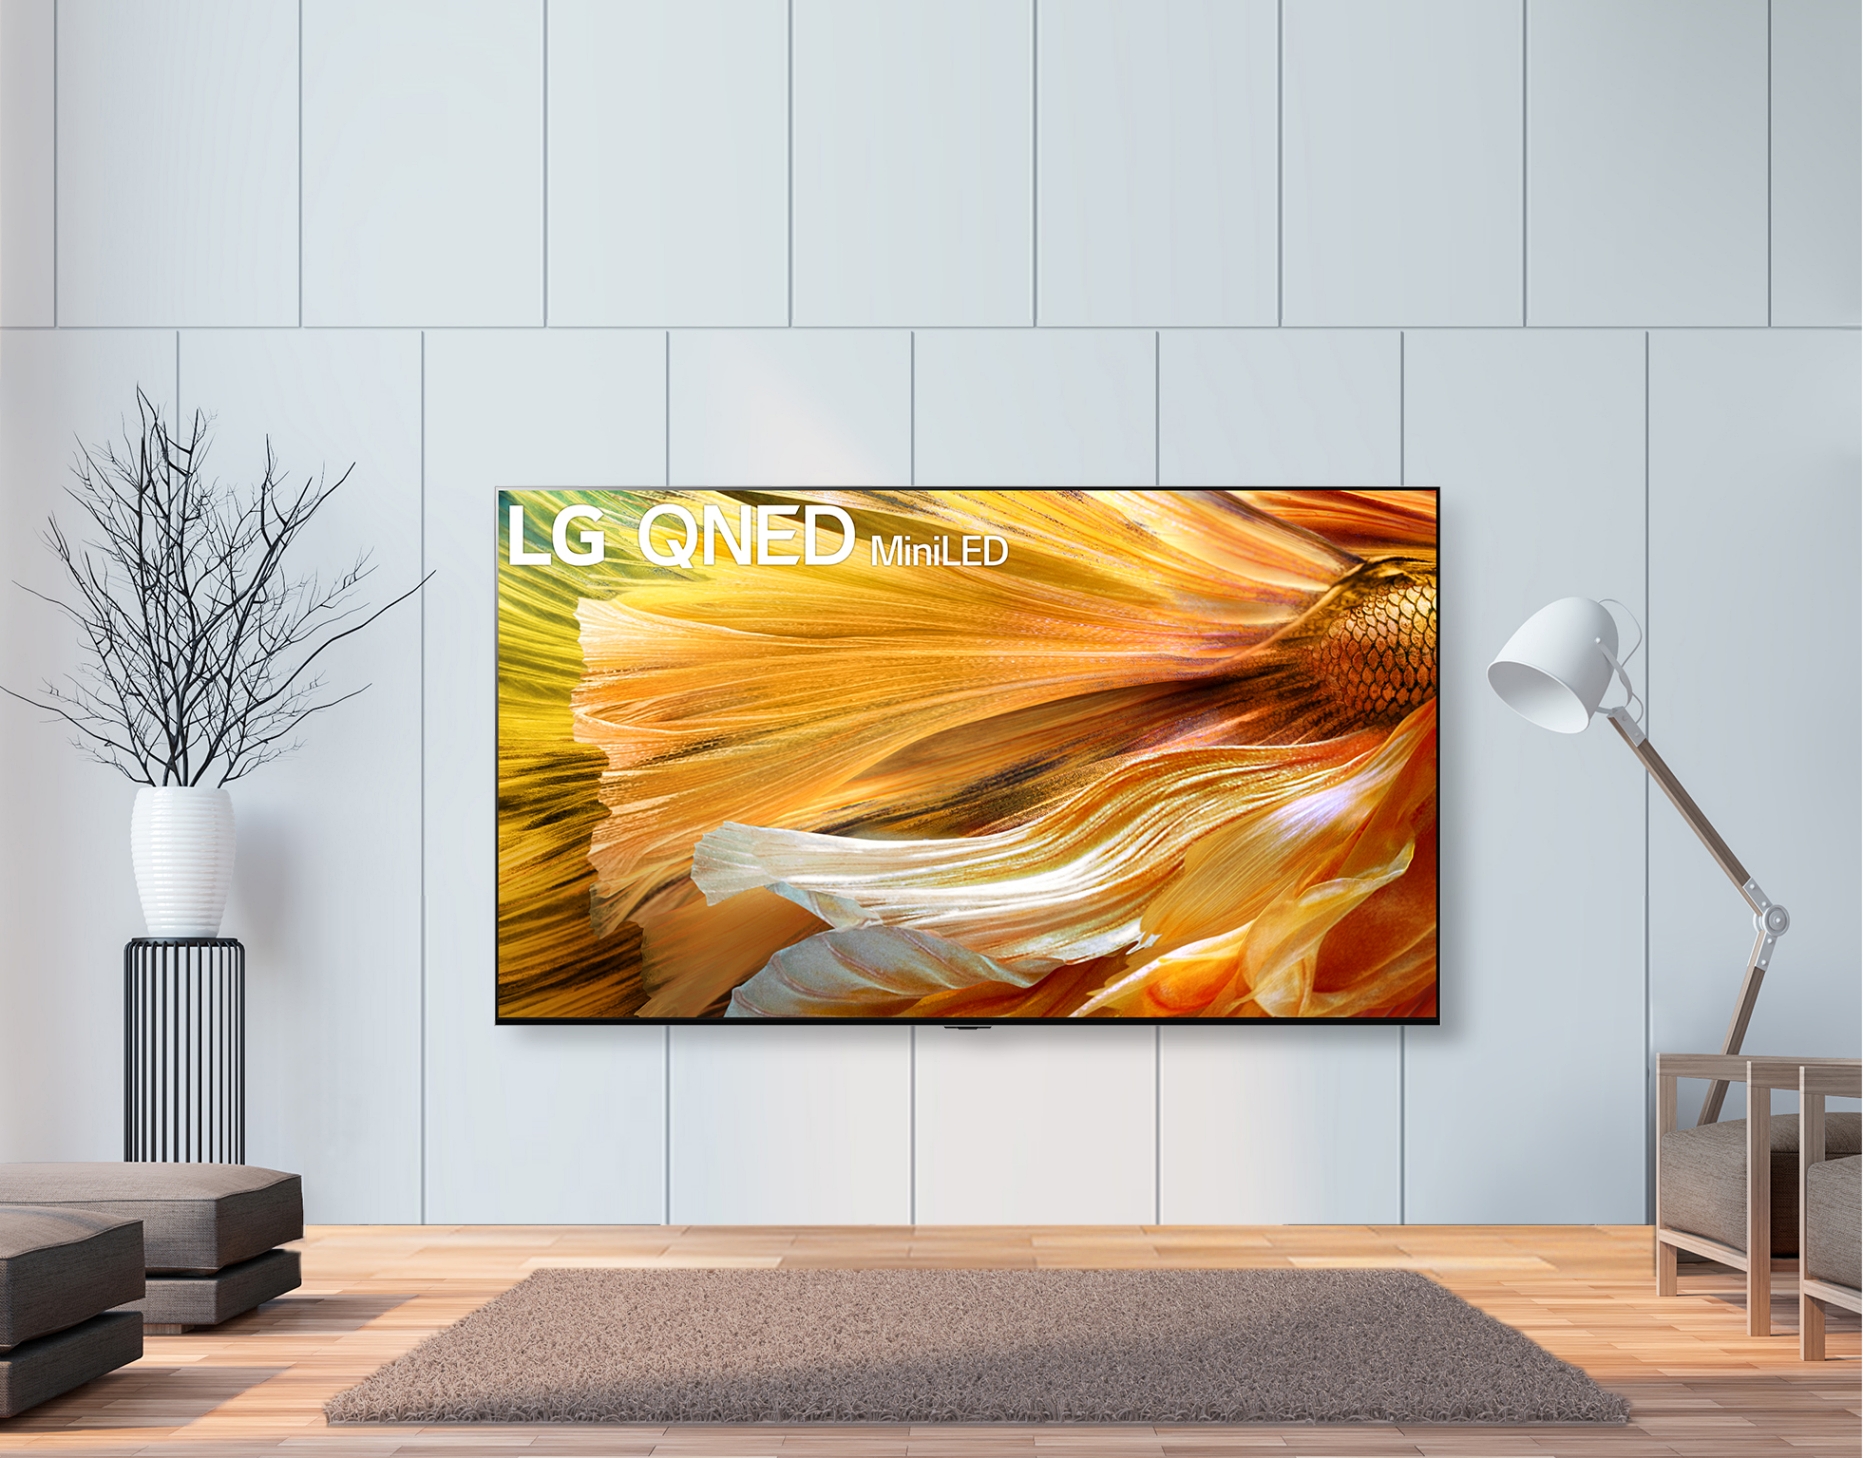 , LG QNED966: Η εξέλιξη των LCD TV έρχεται με την τεχνολογία Mini LED